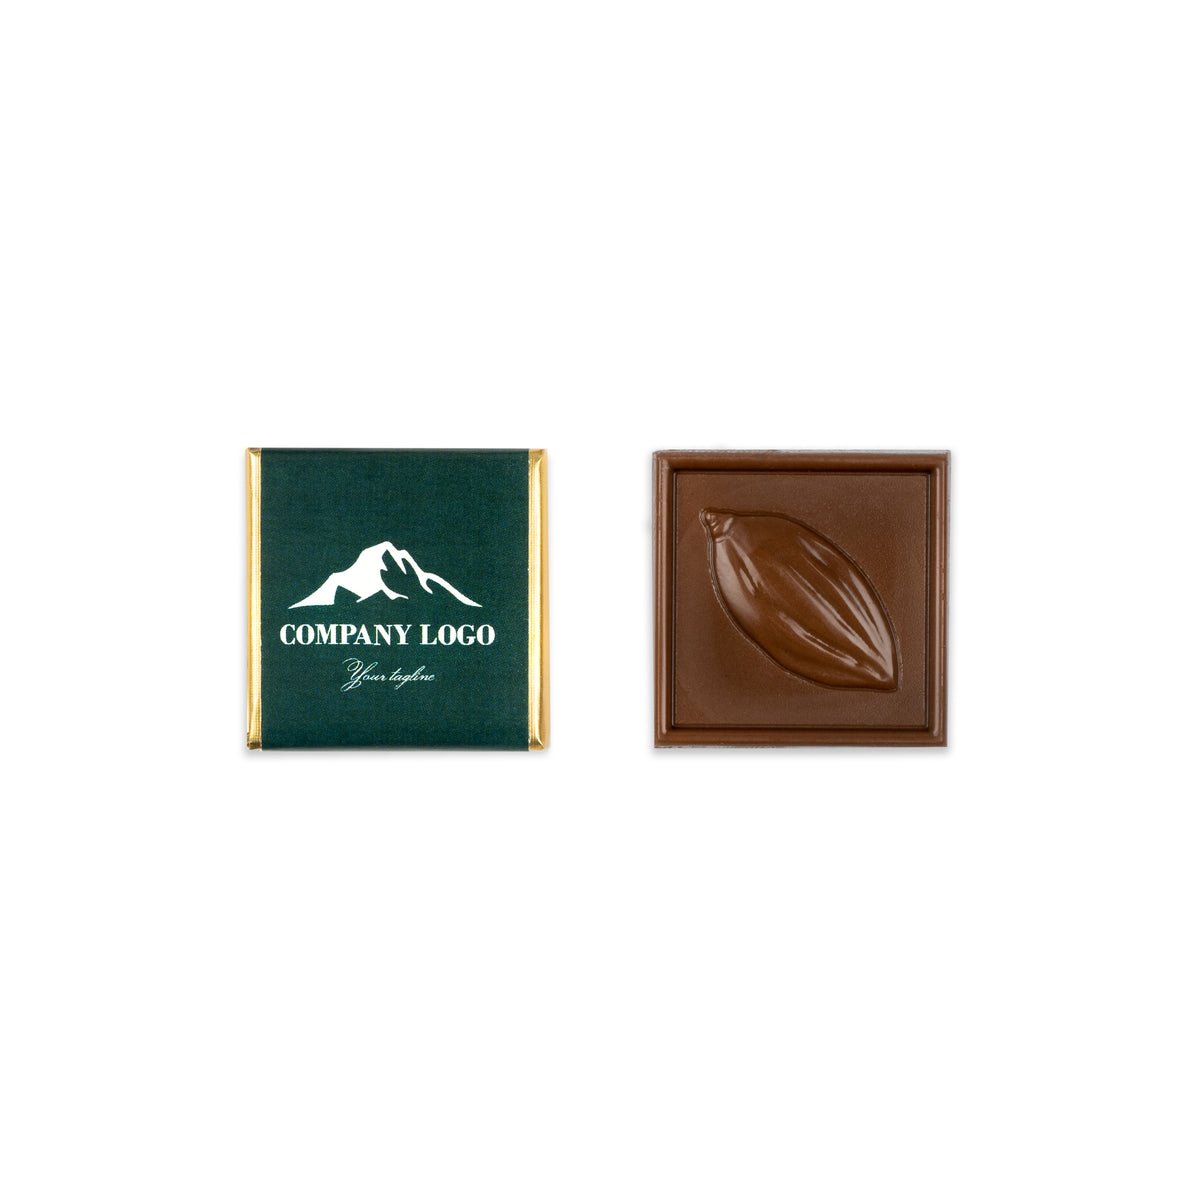 Customized envelope of 4 chocolate squares